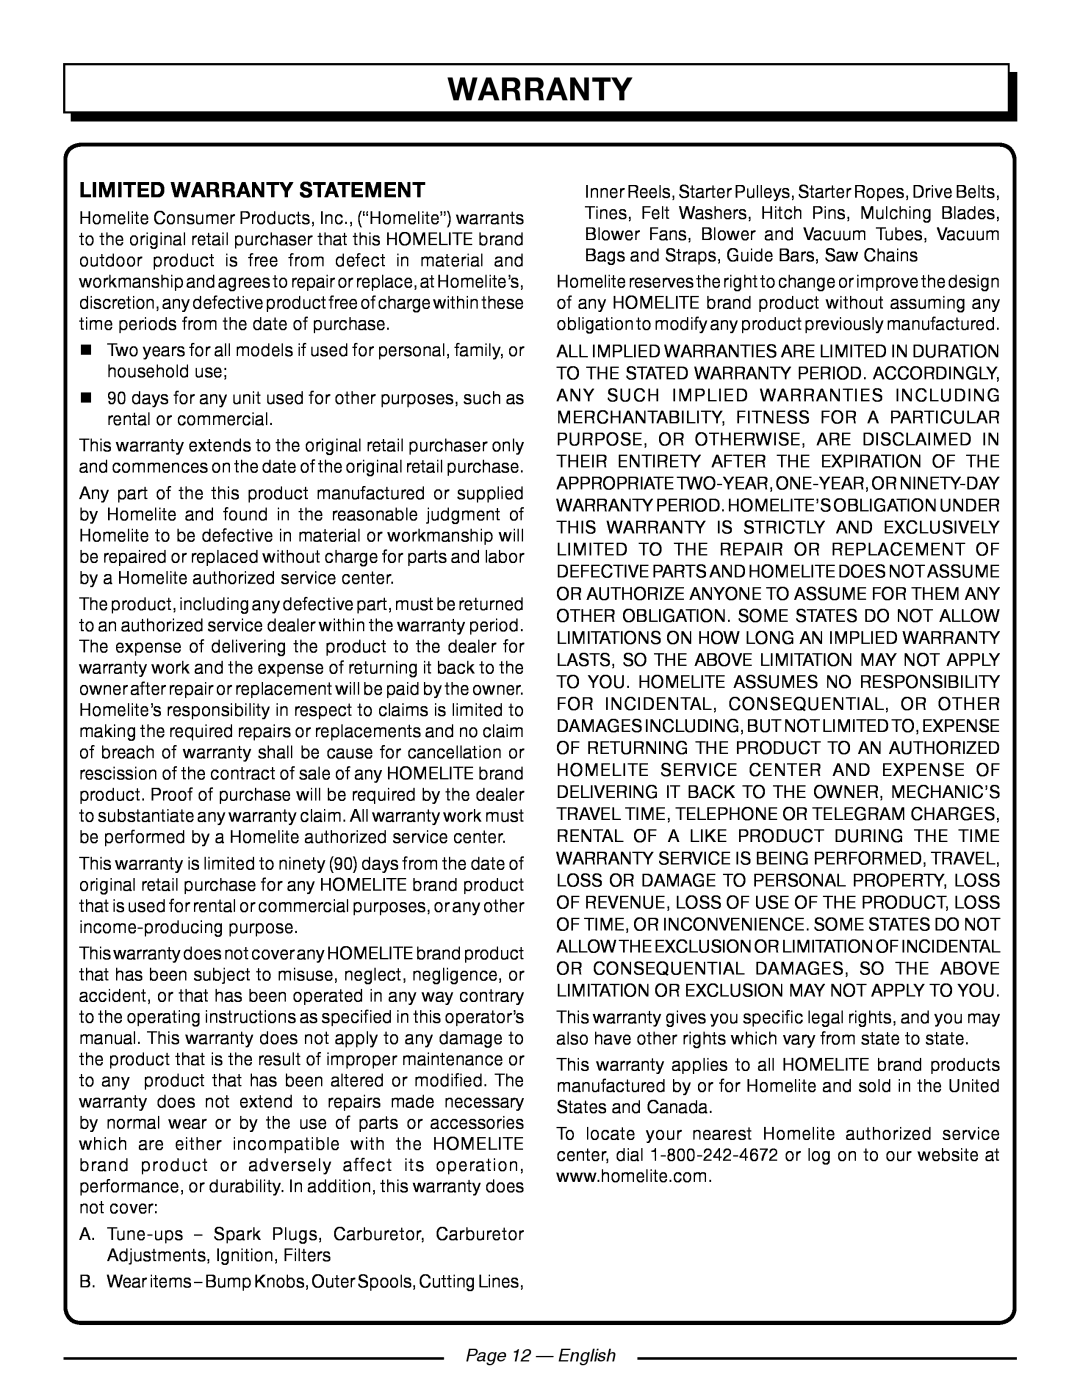 Homelite UT09521 manuel dutilisation Limited Warranty Statement, Page 12 - English 